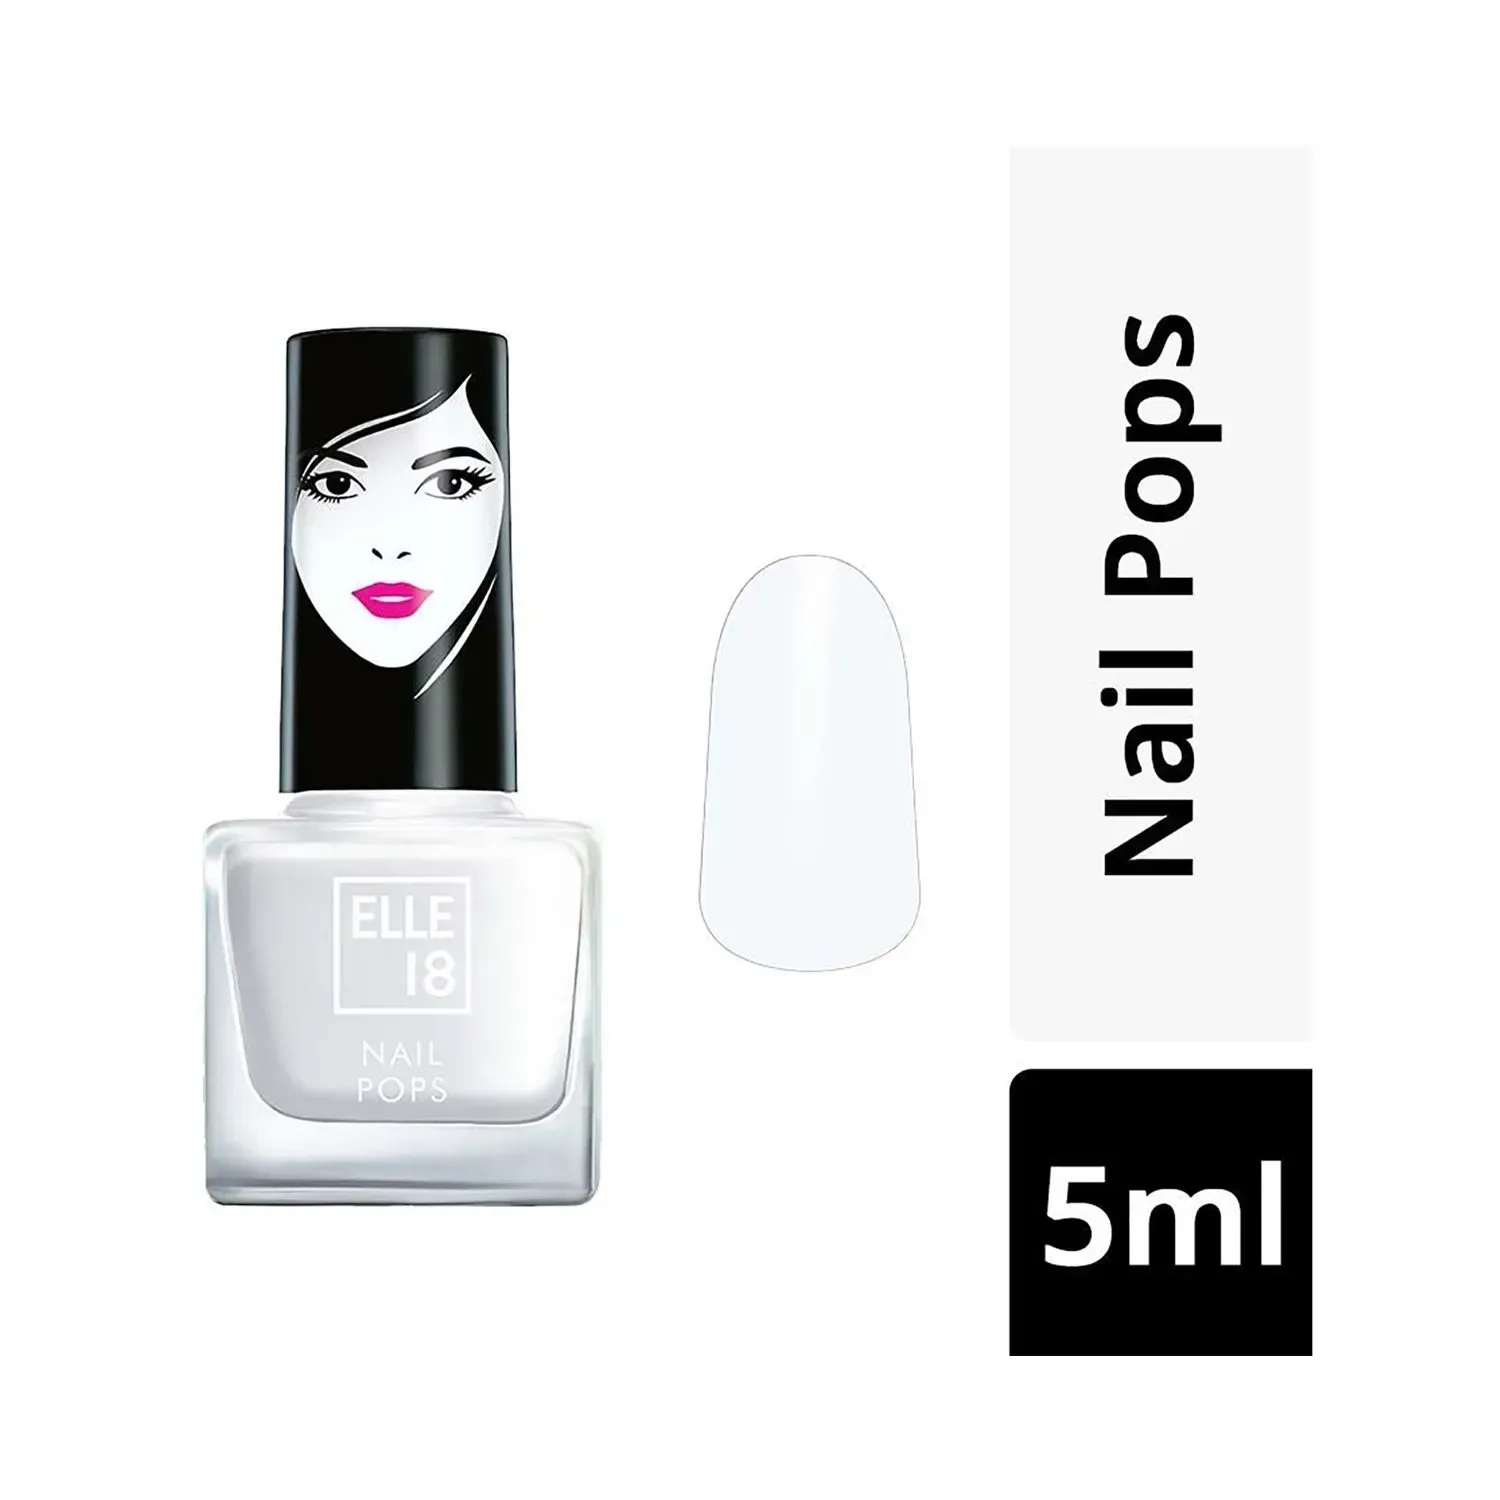 Buy Elle 18 Nail Pops Nail Color Shade 35 - 5 ml for Online @ Tata CLiQ